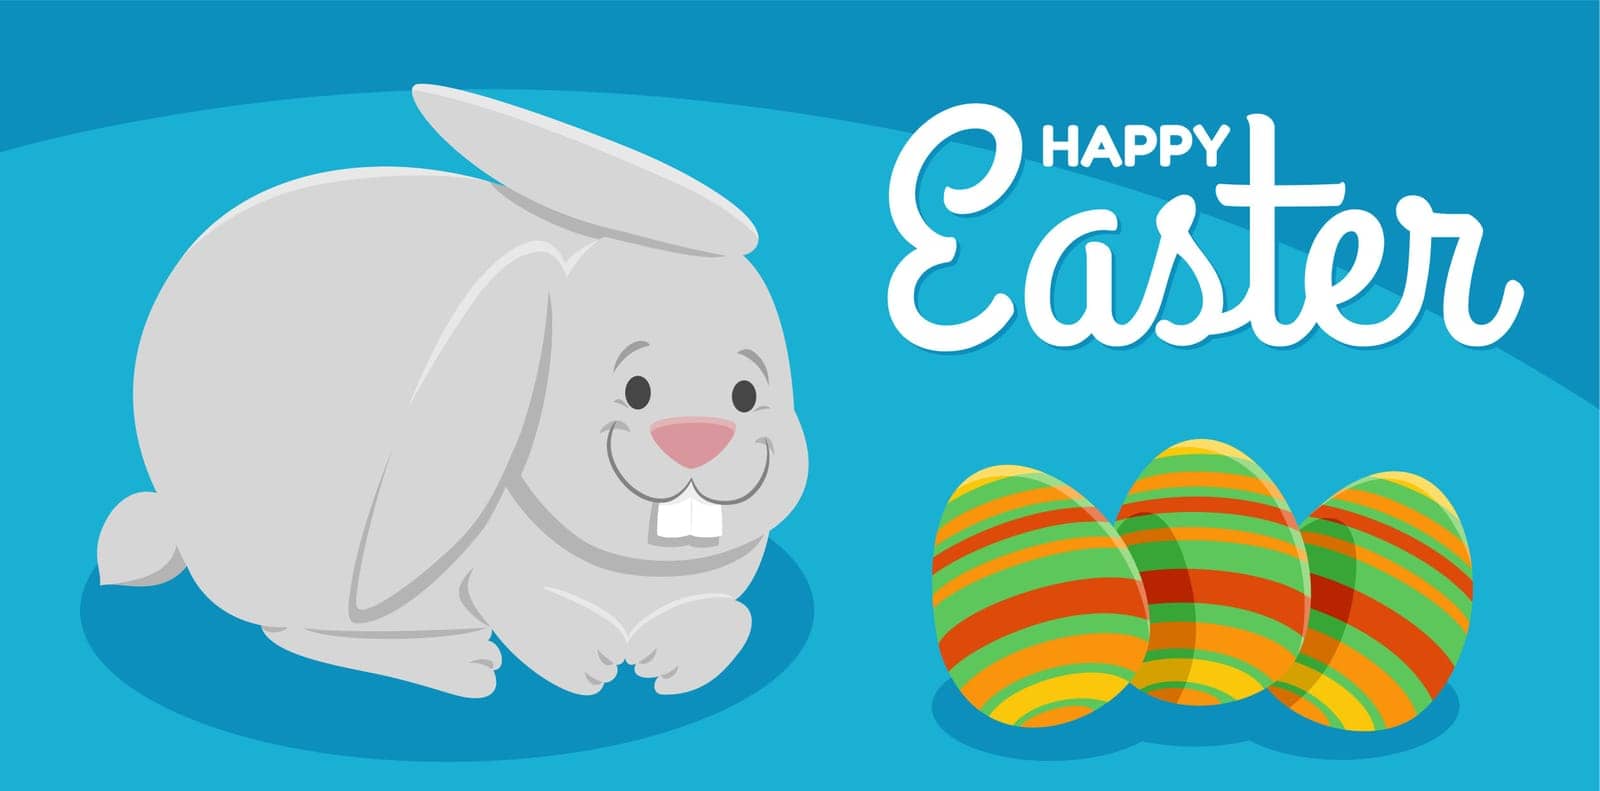 cartoon Easter bunny with Easter eggs greeting card design by izakowski